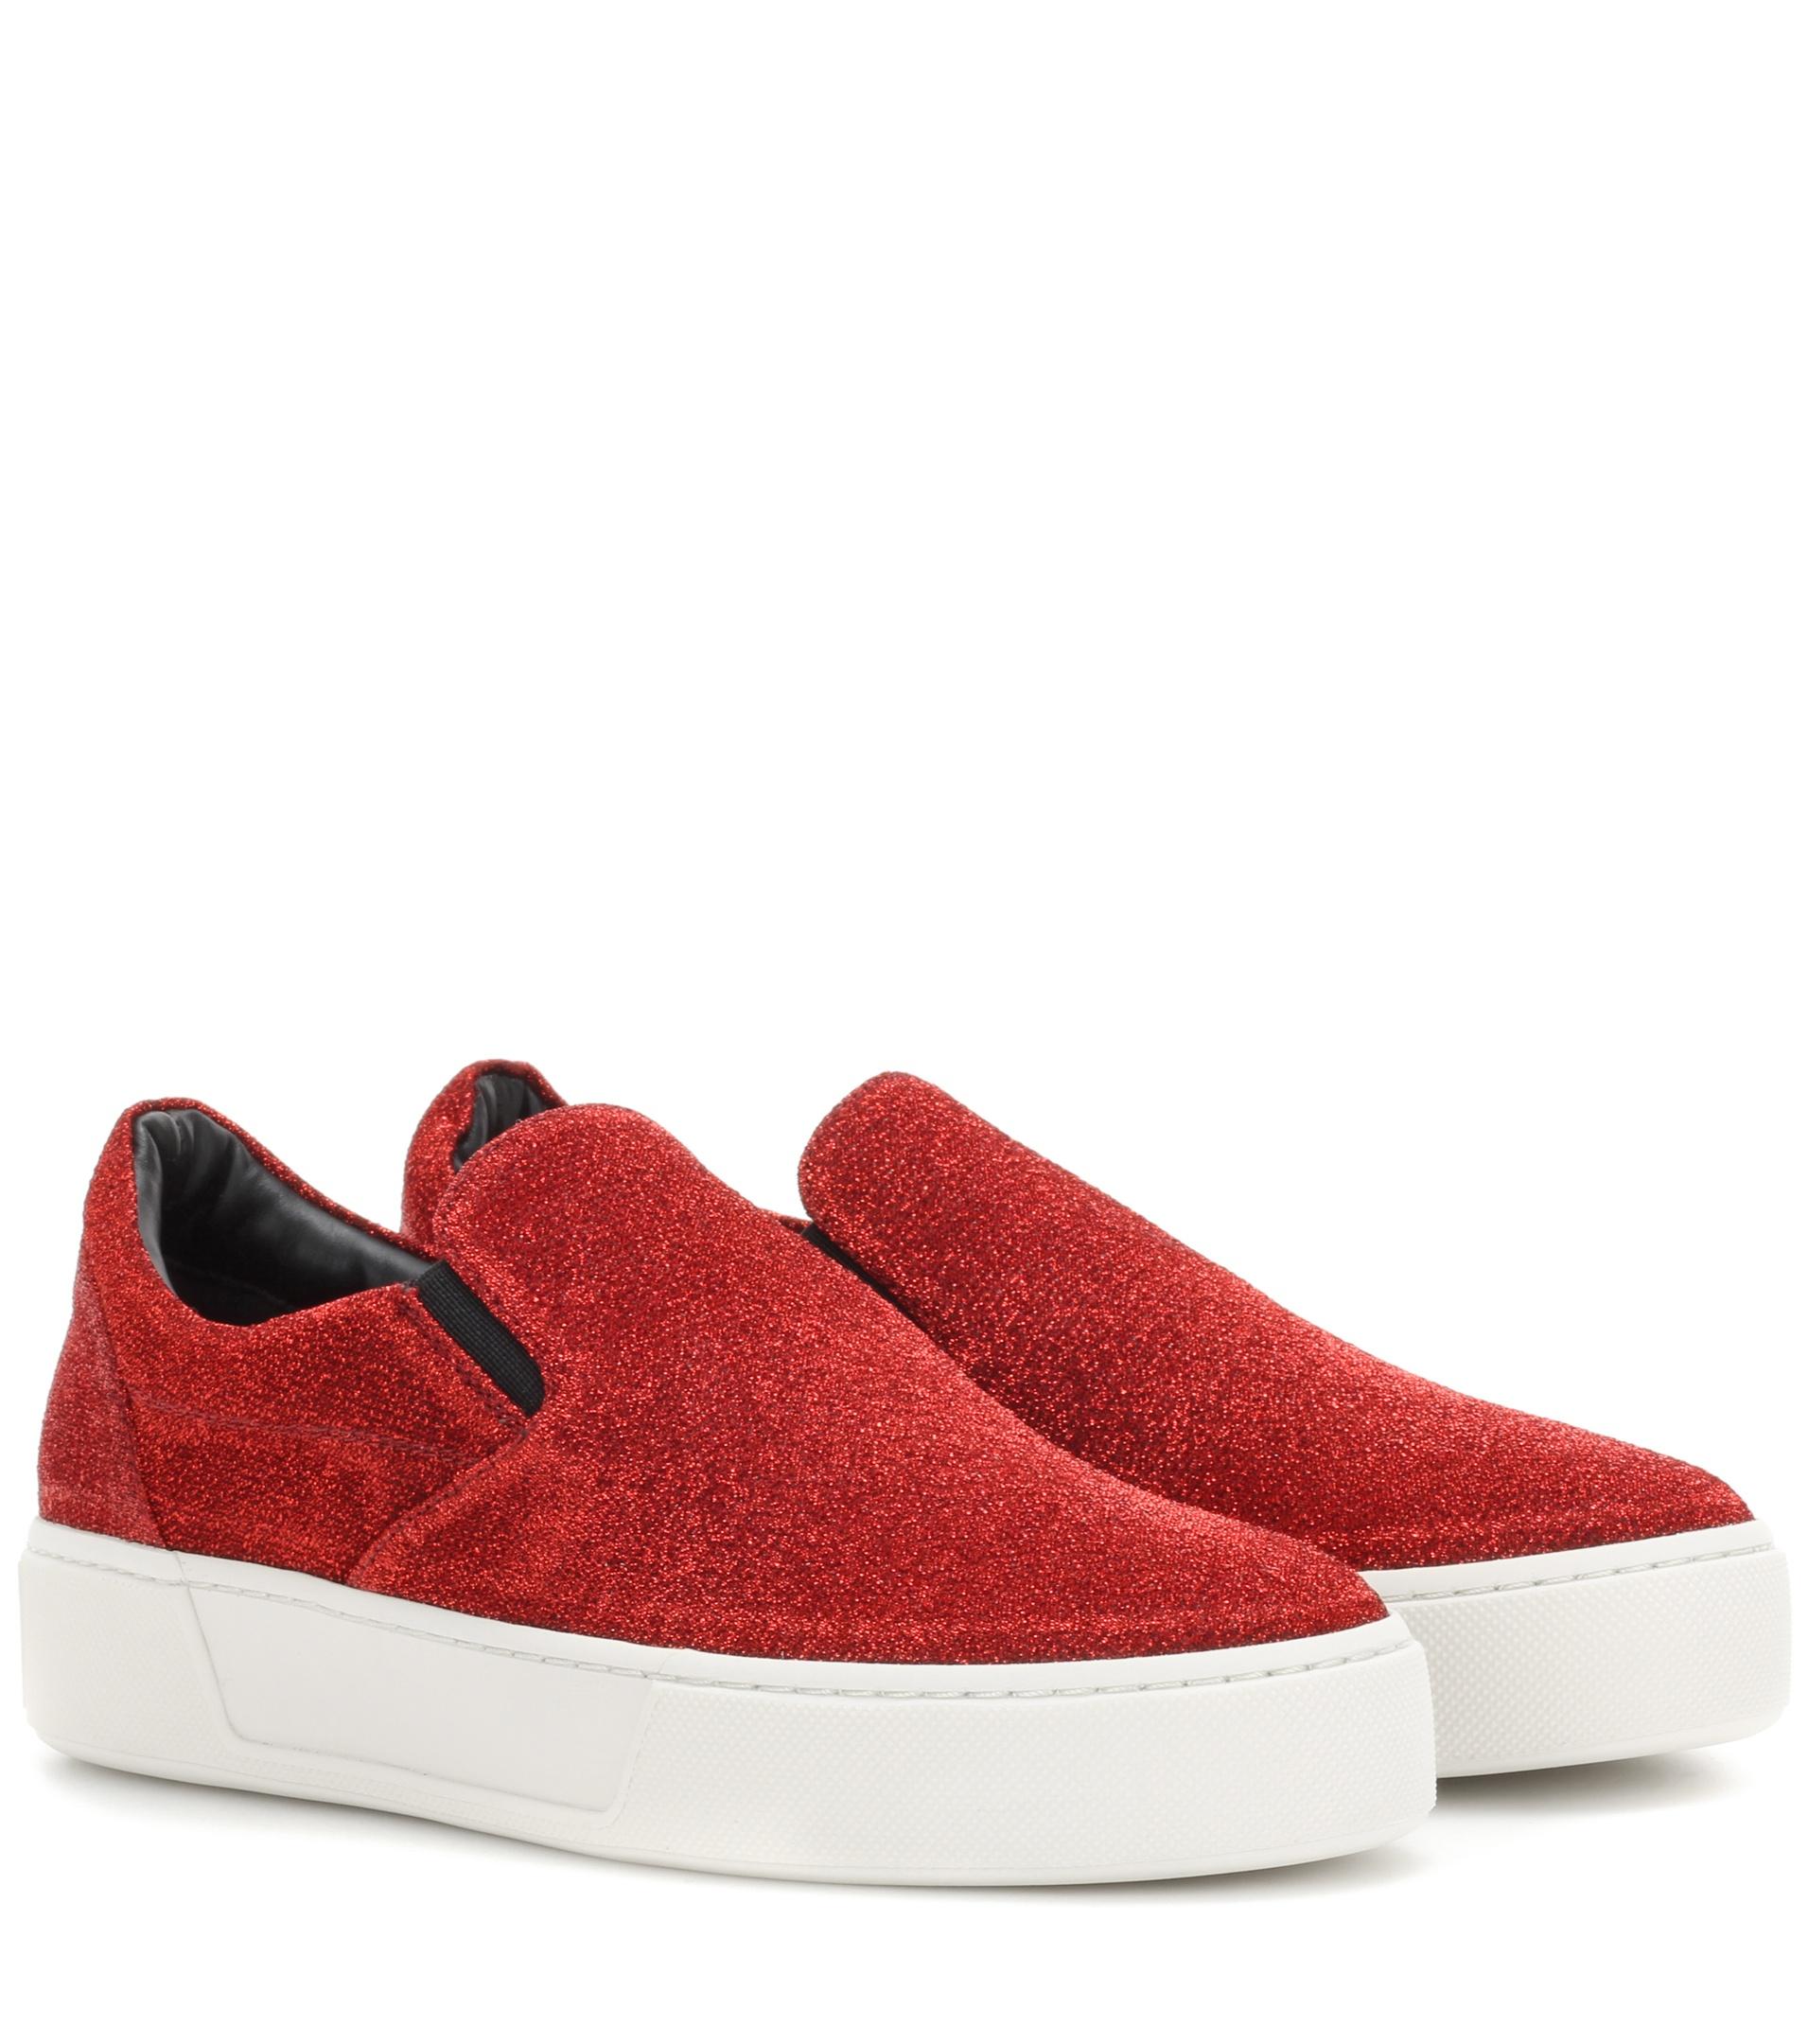 Lyst - Balenciaga Glitter Slip-on Sneakers in Red